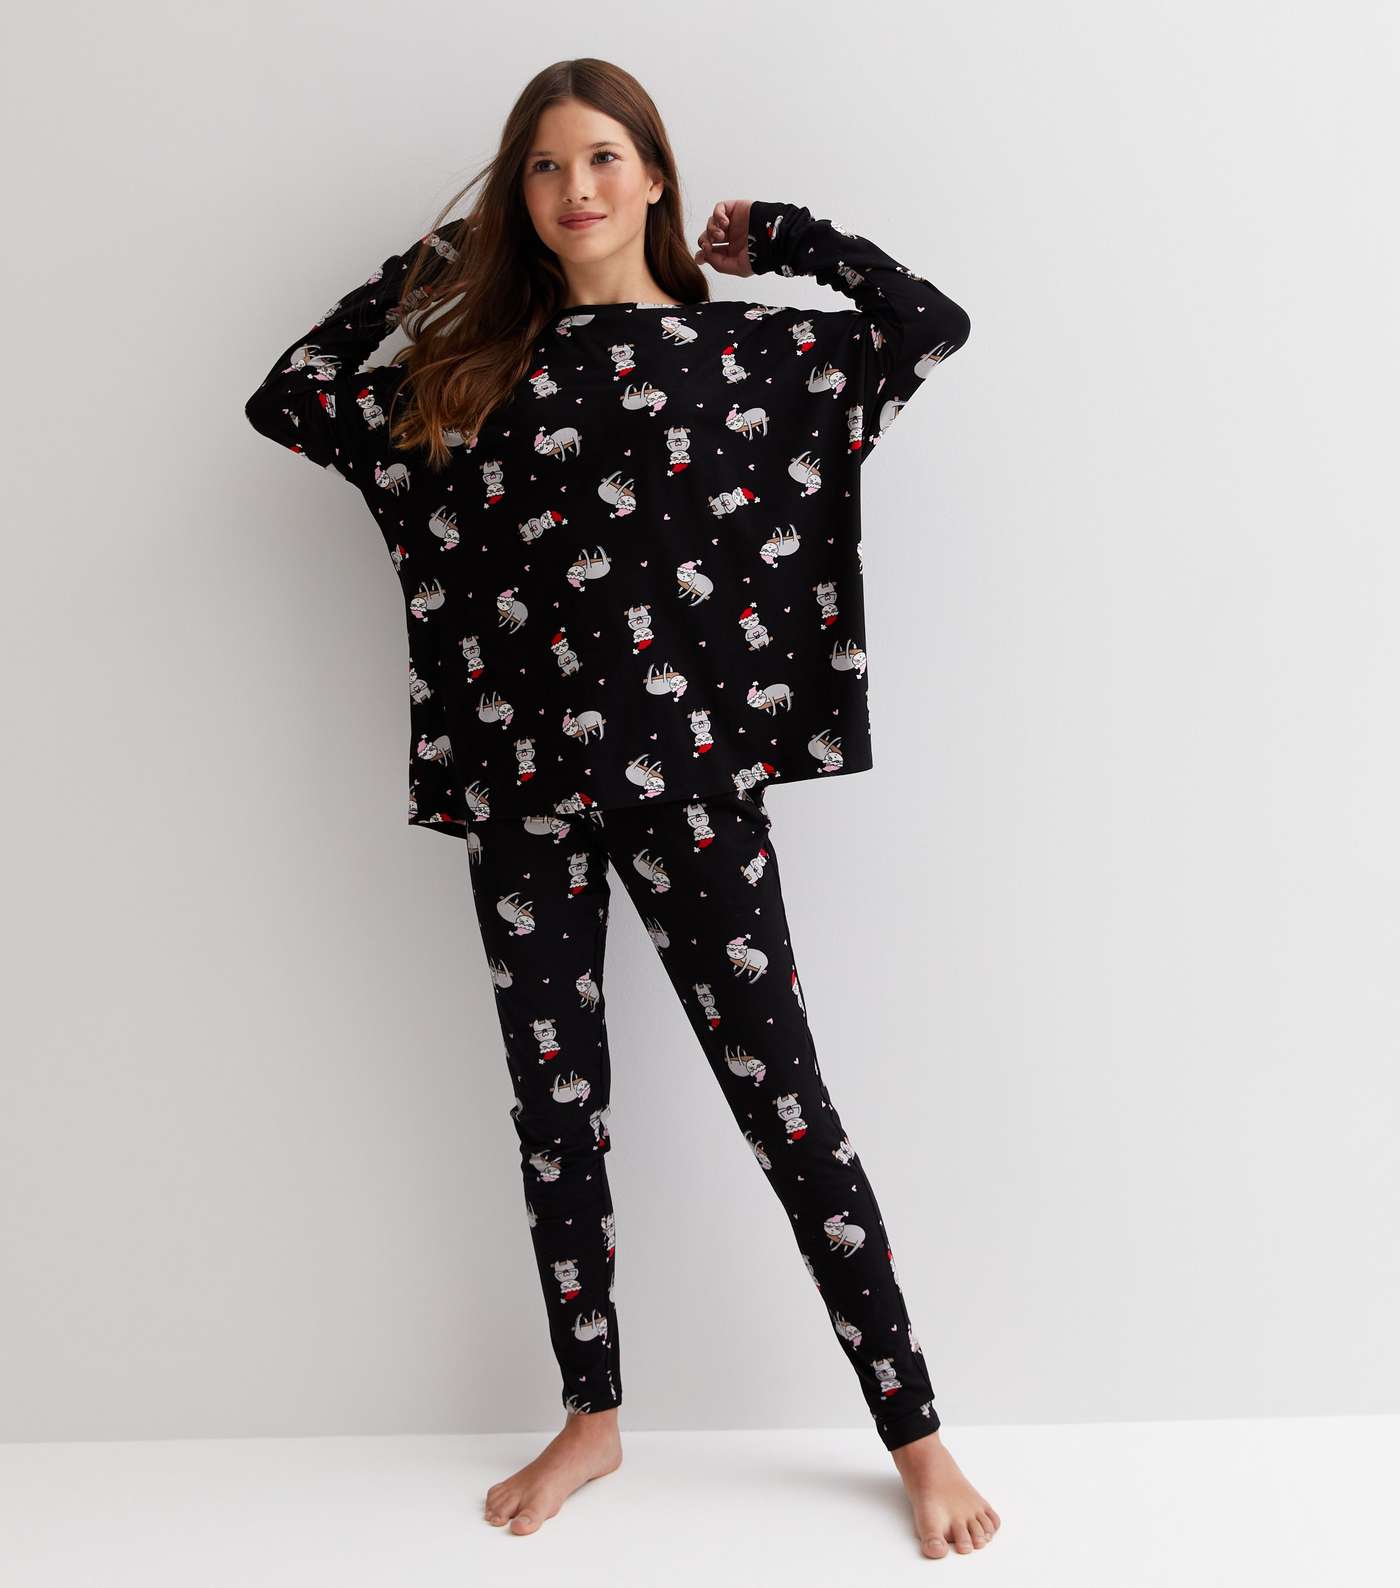 Girls Black Soft Touch Legging Pyjama Set with Christmas Sloth